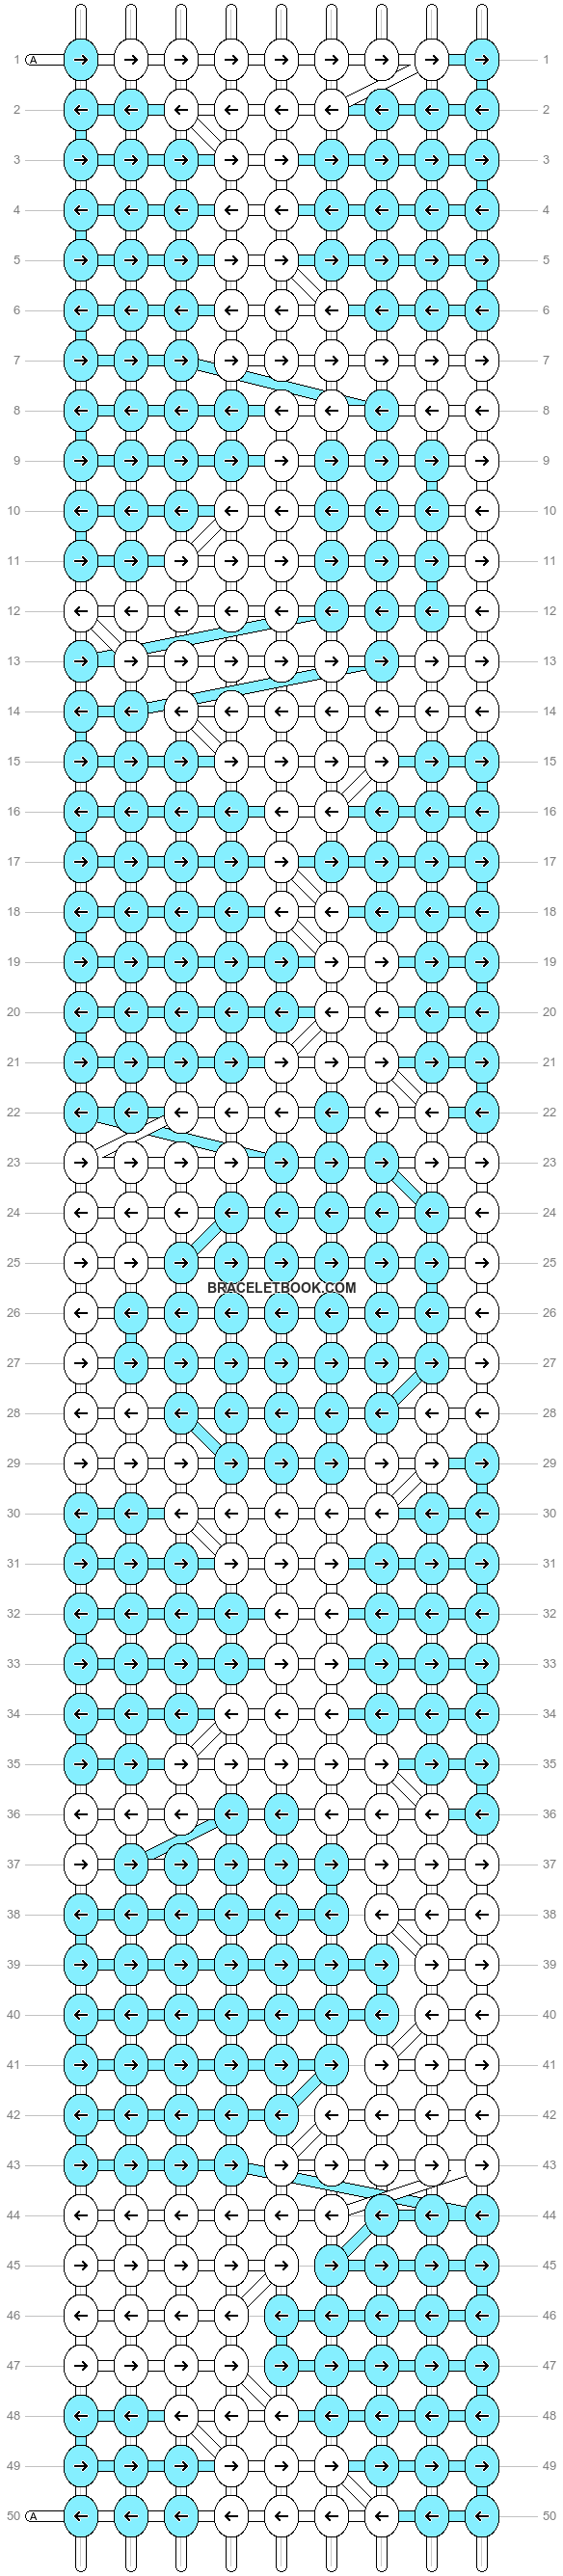 Alpha pattern #51266 variation #81871 pattern